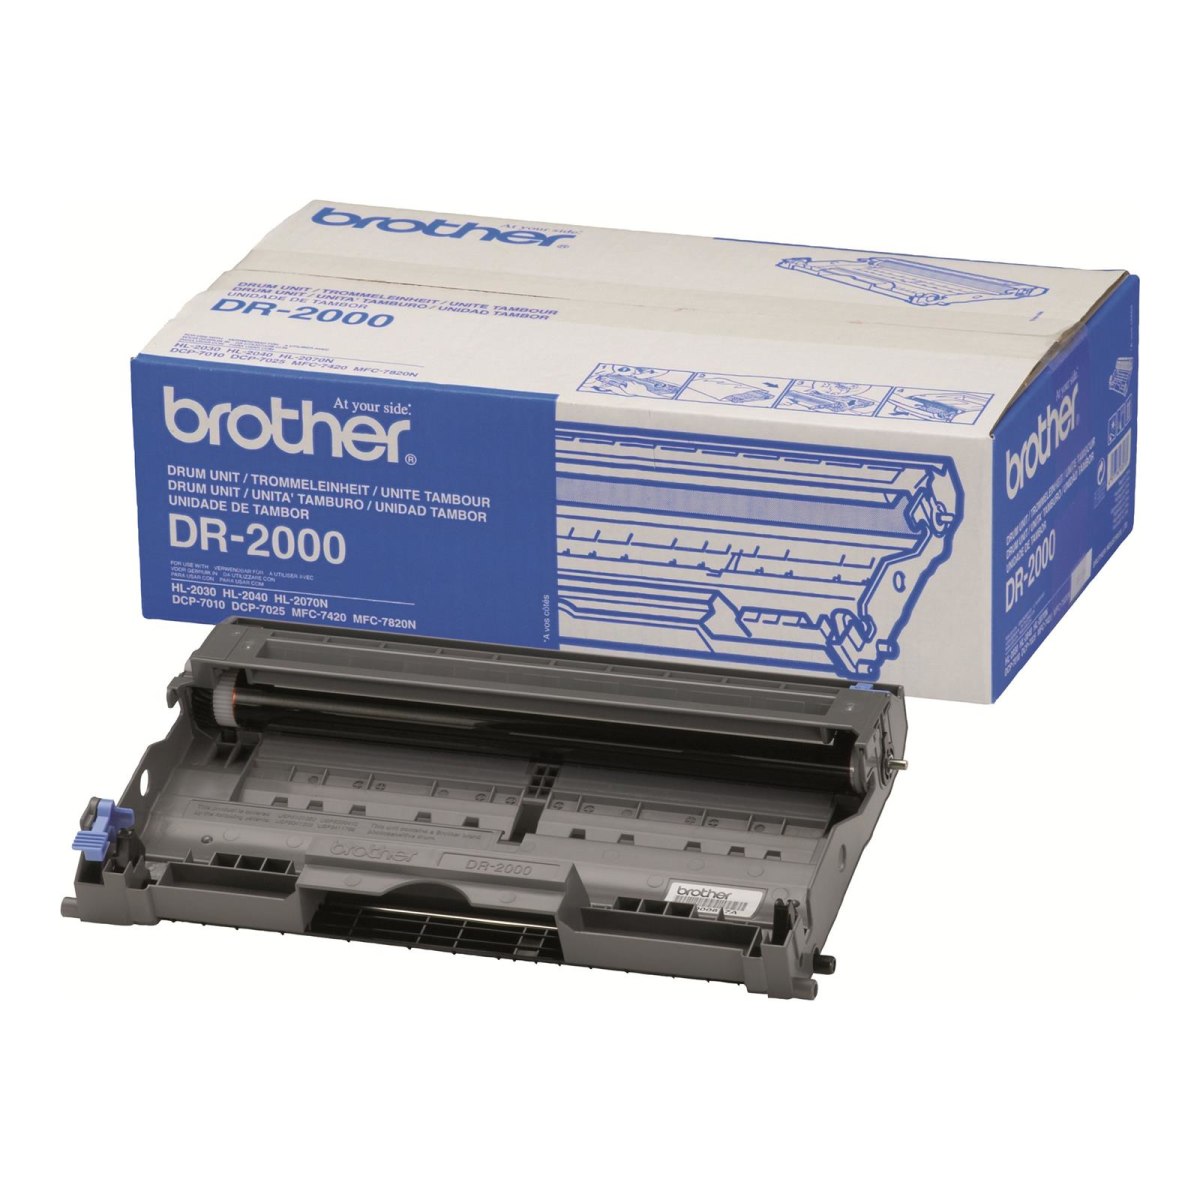 2 Toner kompatibel für Brother TN-2000 DCP-7010 HL-2030 MFC-7420 Fax 2820 2920 